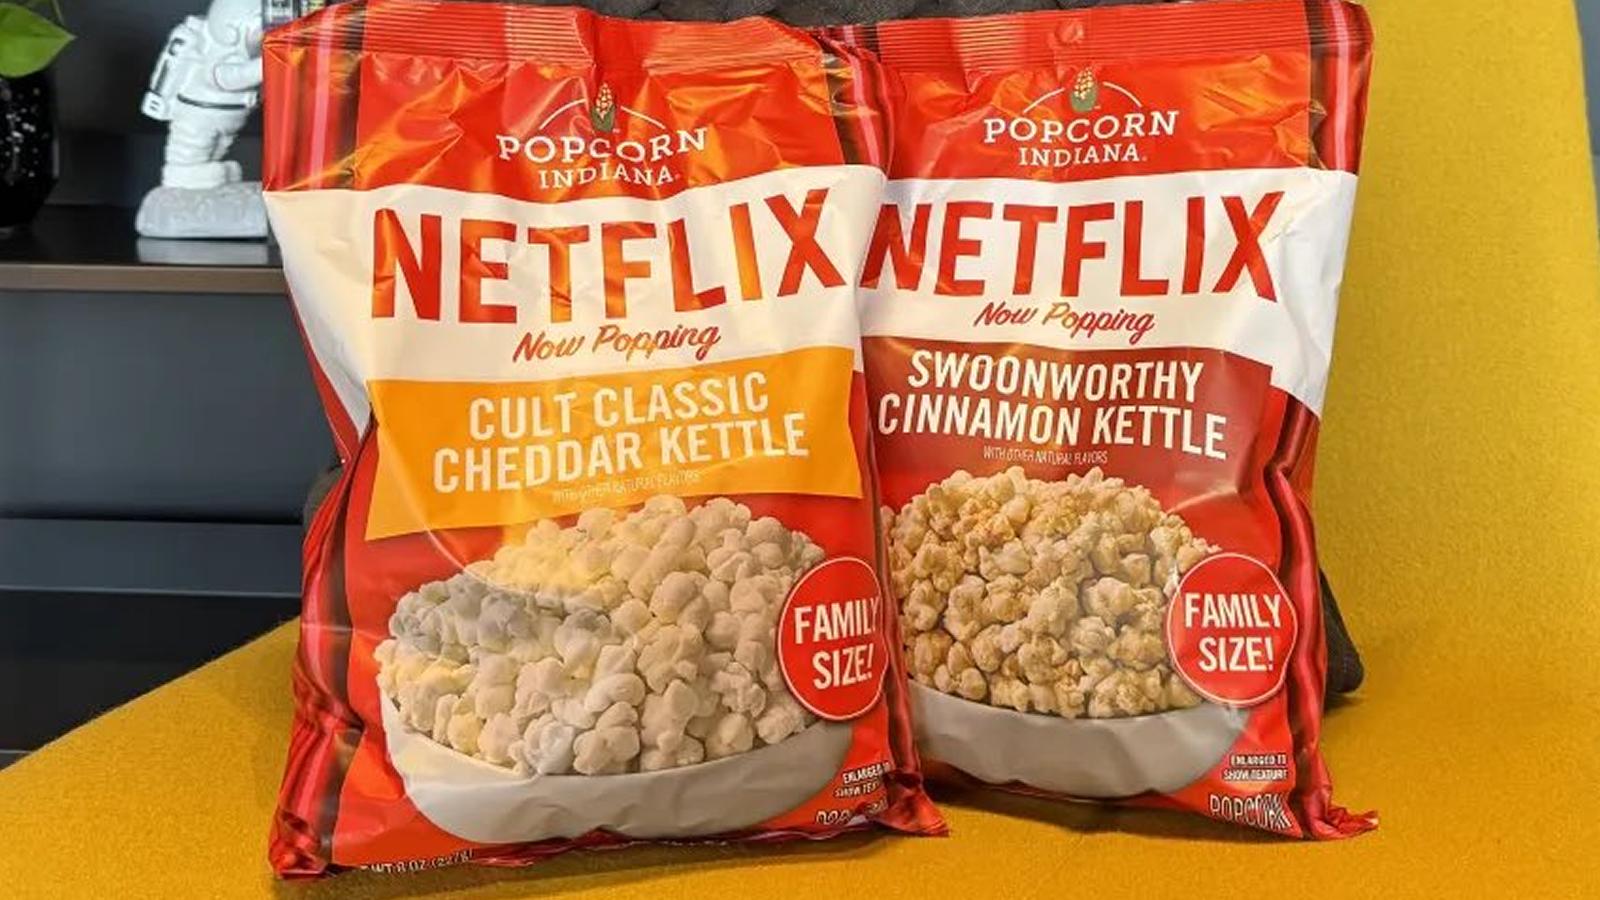 Netflix's popcorn line